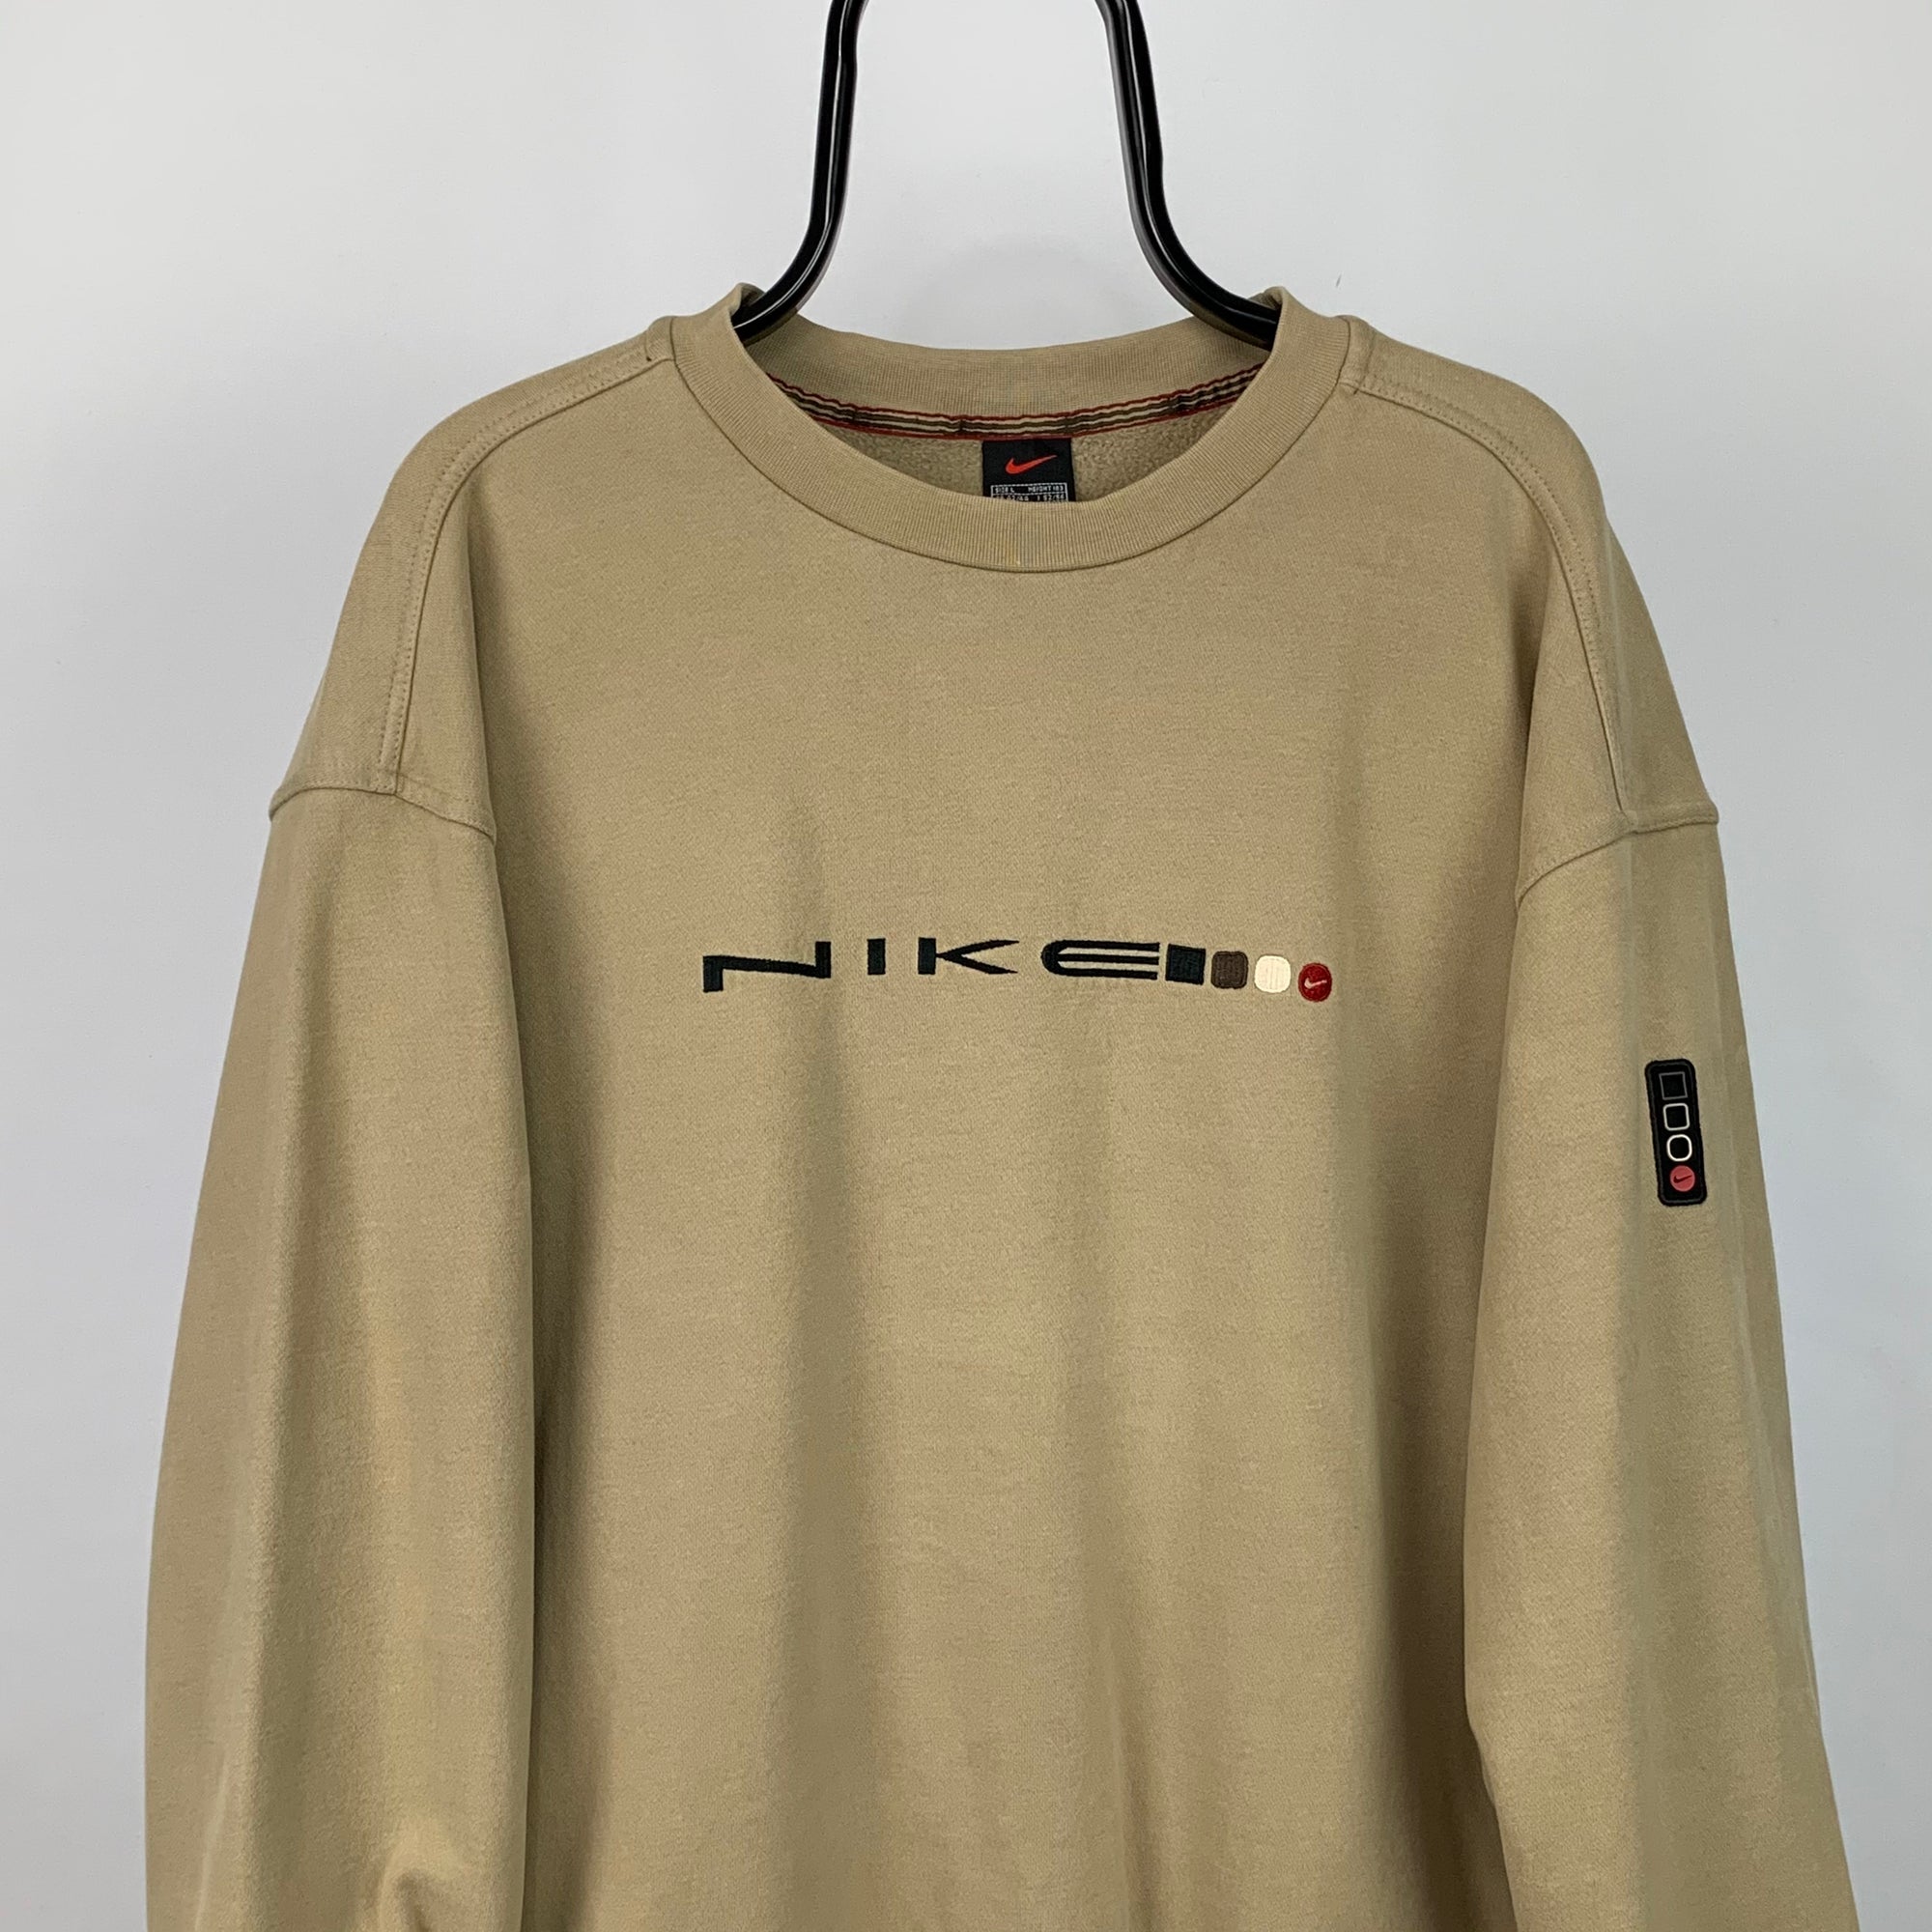 Vintage 90s Nike Embroidered Spellout Sweatshirt in Beige - Men's Large/Women's XL